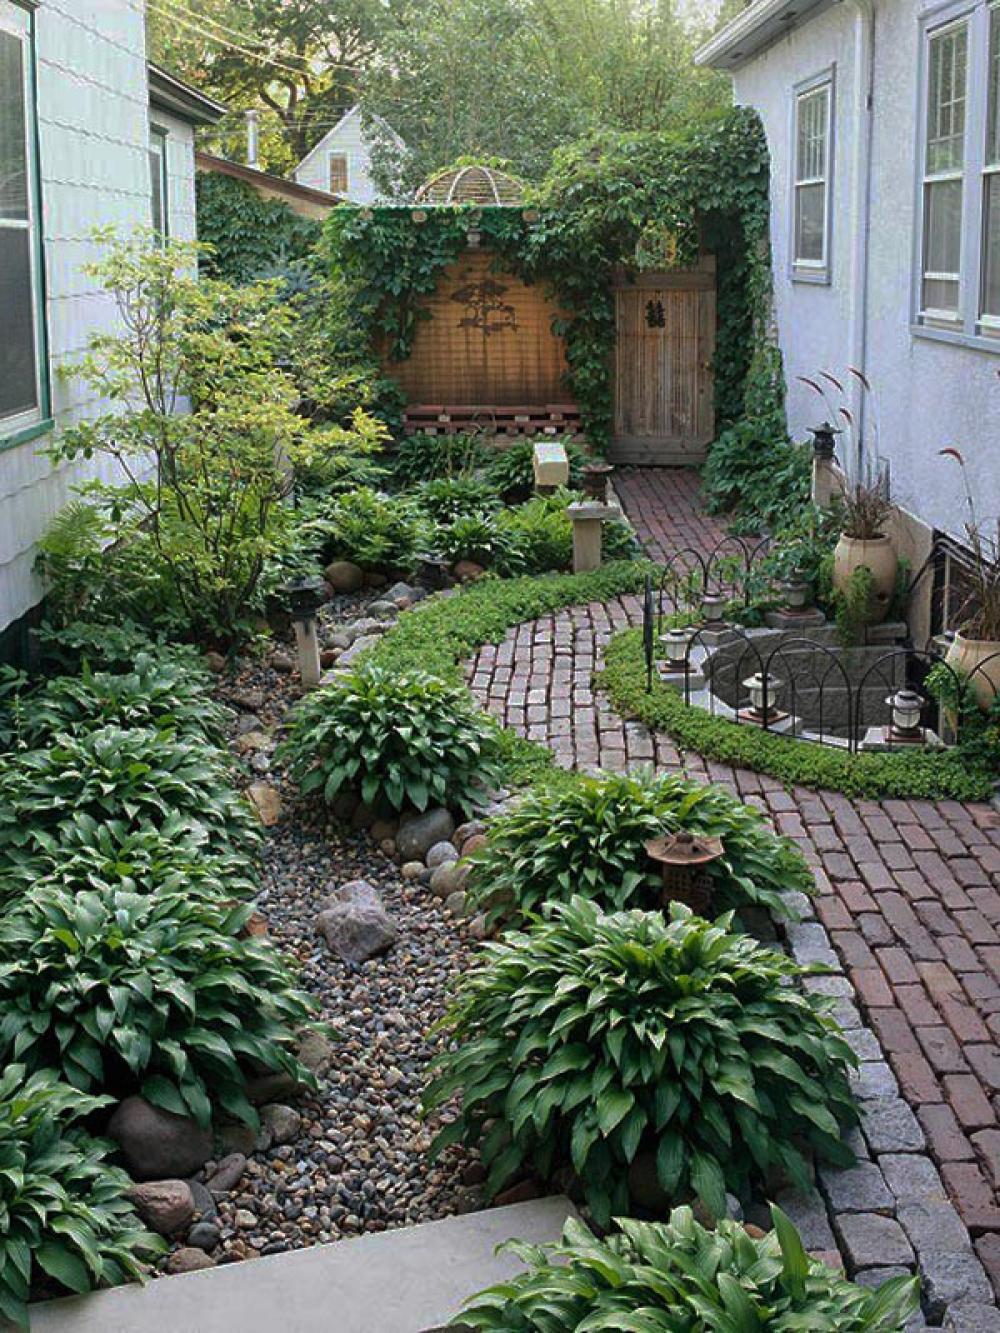  Small  Garden  Design  in Home  Home  and Design 